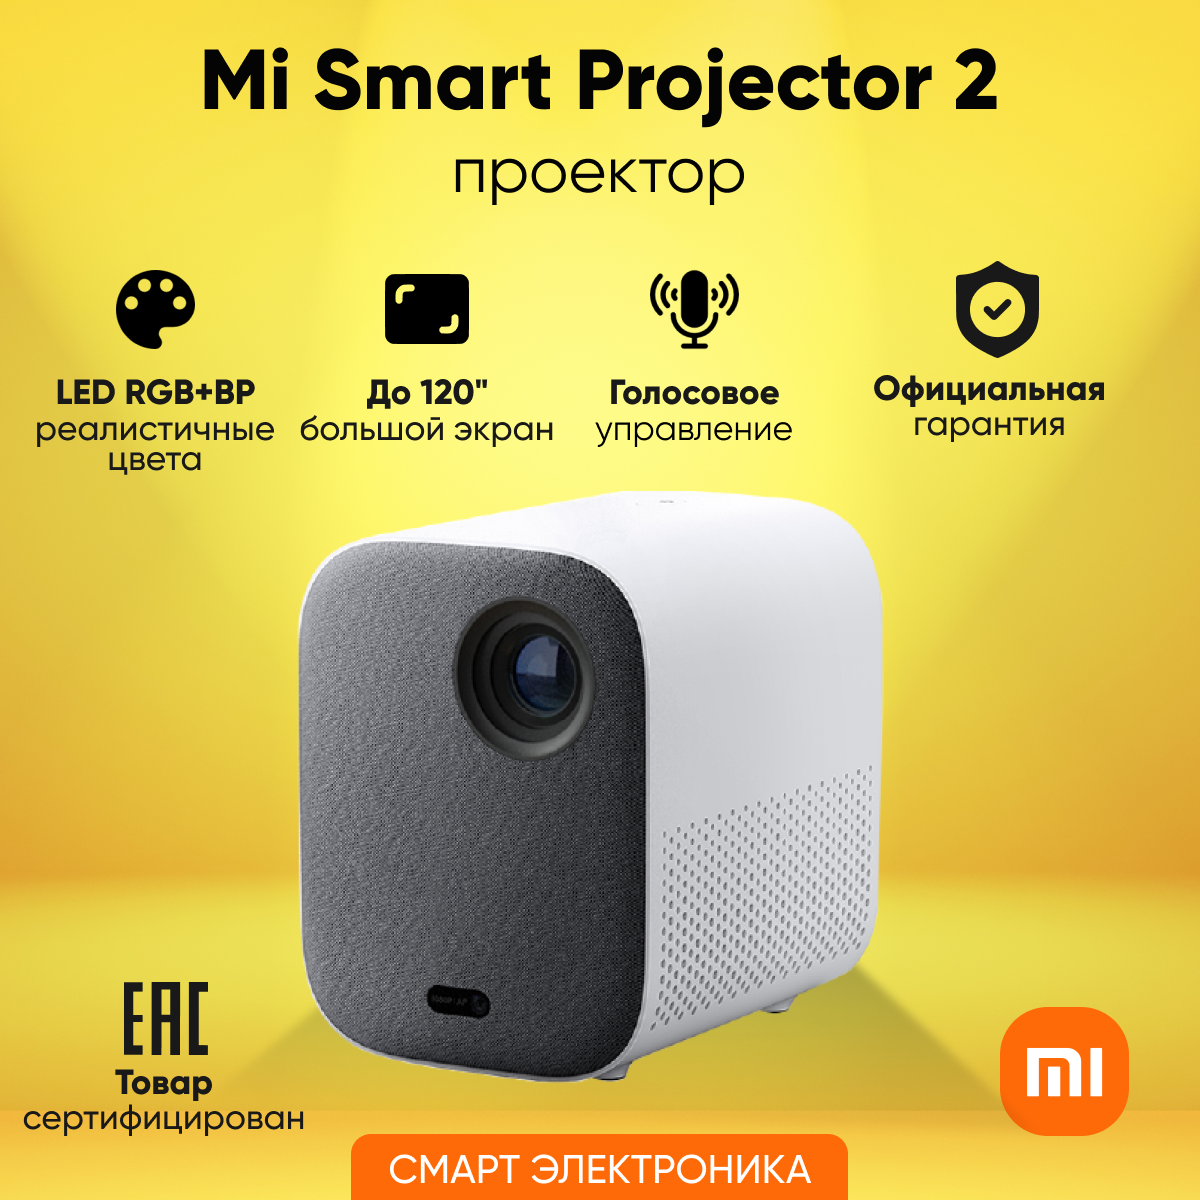 Проектор Xiaomi Mi Smart Projector 2 1920x1080 (Full HD), 1200:1, 500 лм, DLP, 1.3 кг